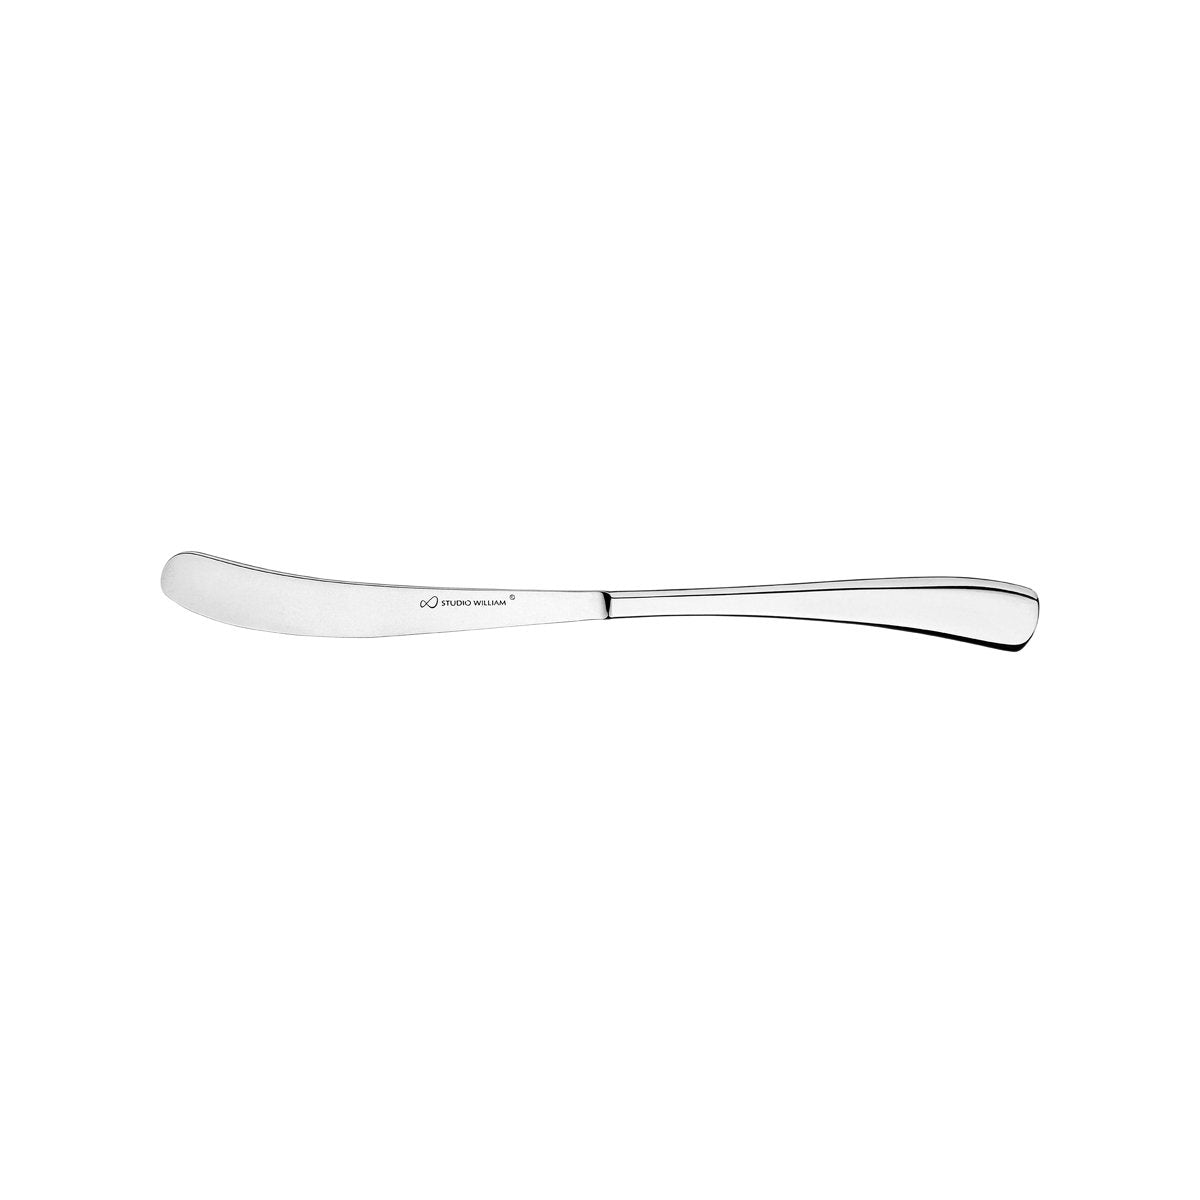 SWW-LAM01 Studio William Larch Table Knife 240mm Tomkin Australia Hospitality Supplies